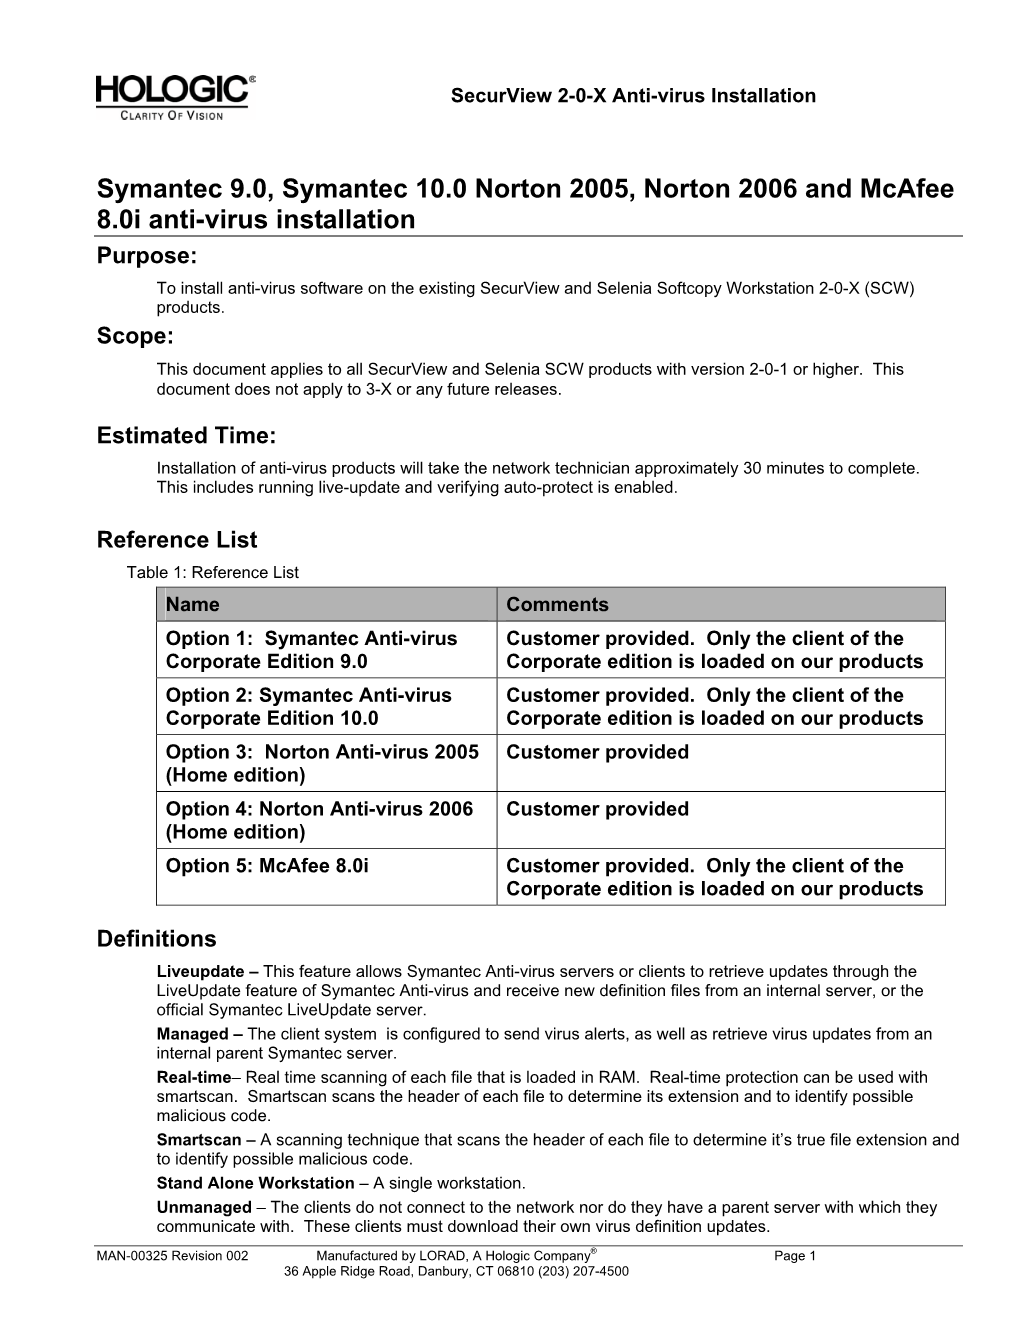 Symantec 9.0, Symantec 10.0 Norton 2005, Norton 2006 and Mcafee 8.0I